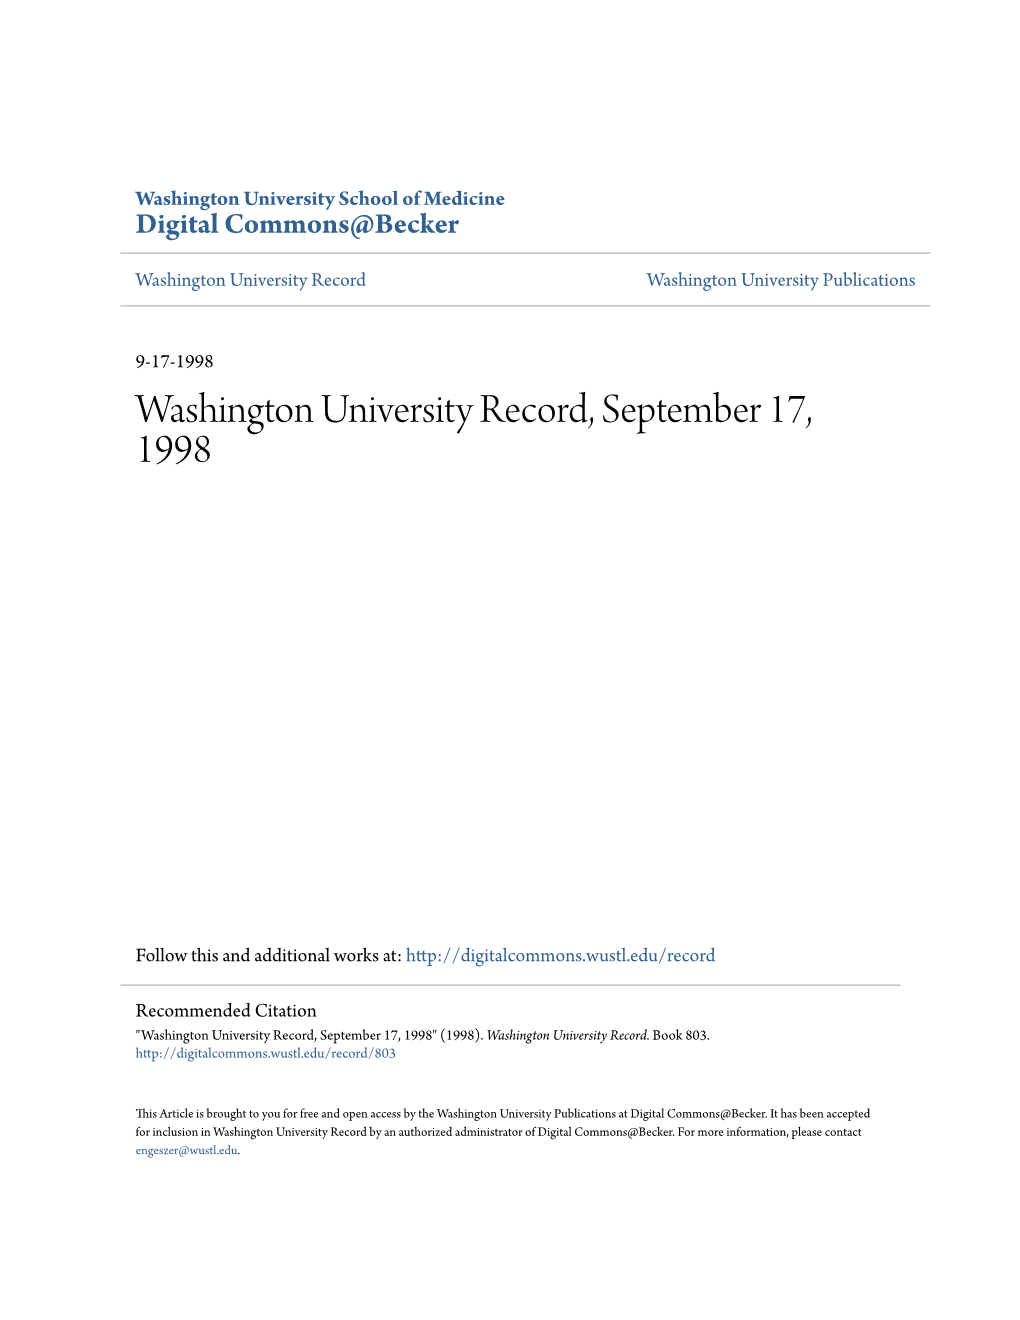 Washington University Record, September 17, 1998